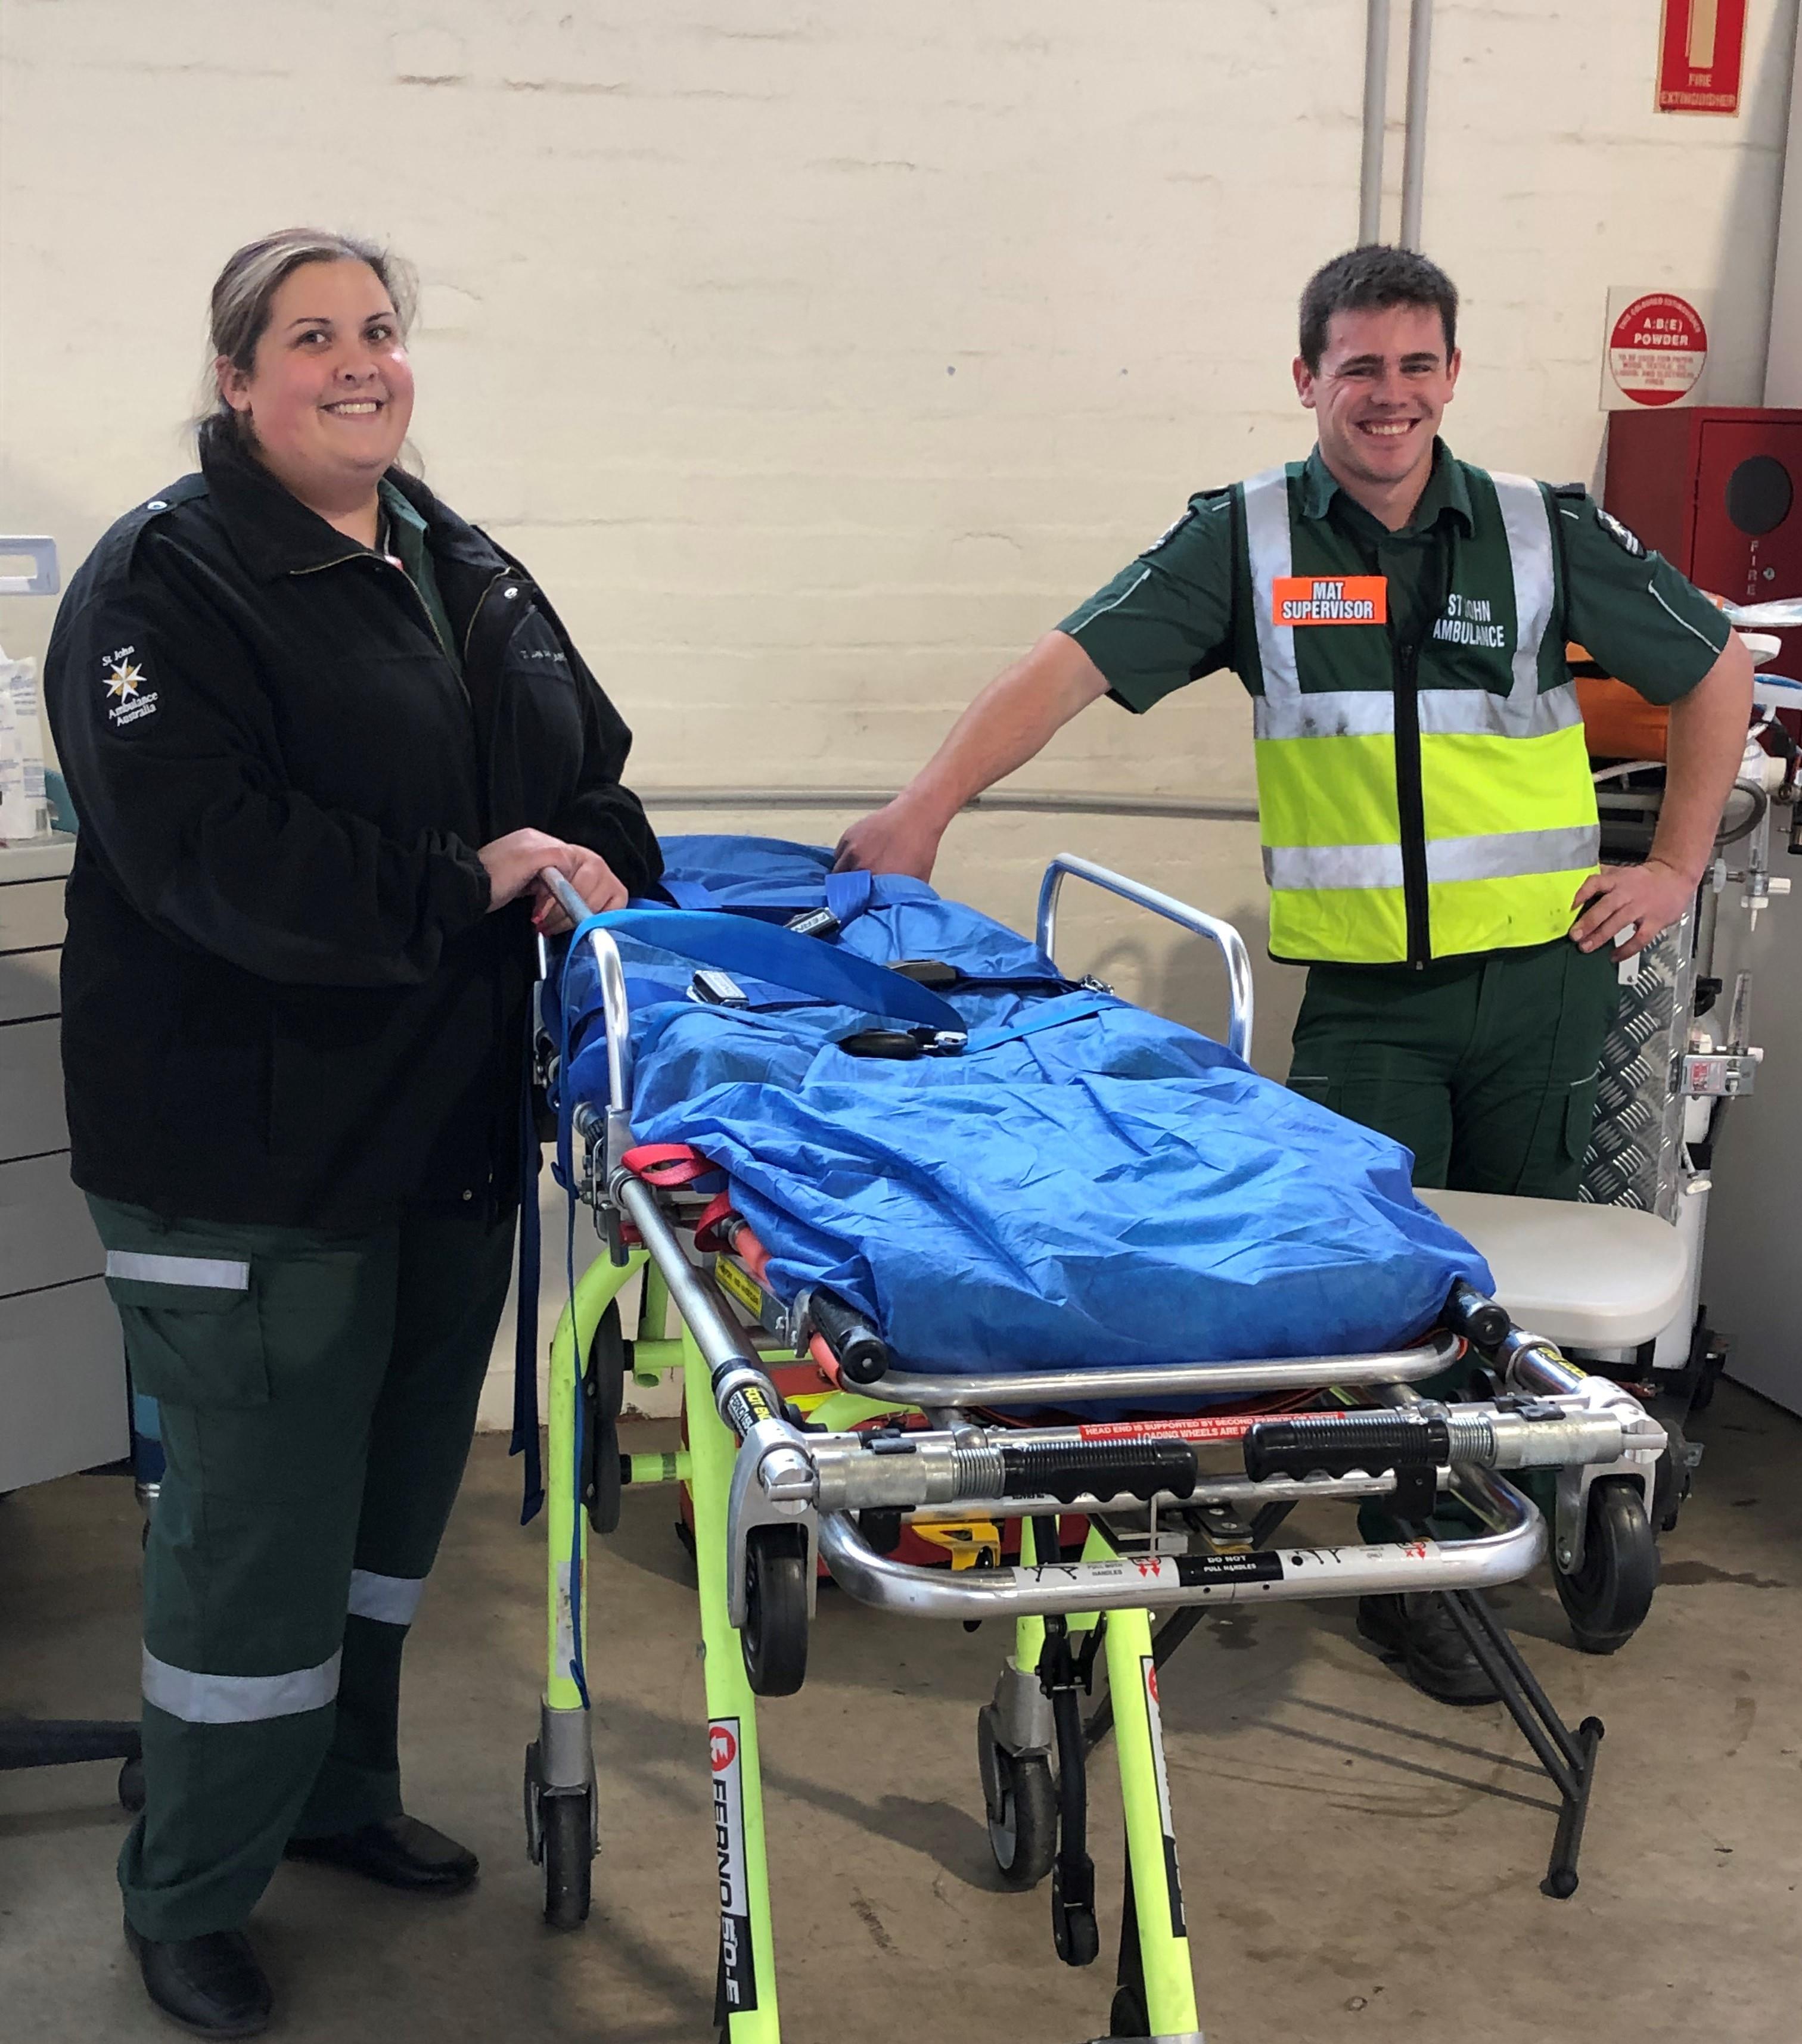 St John emergency urgent response hospital volunteers